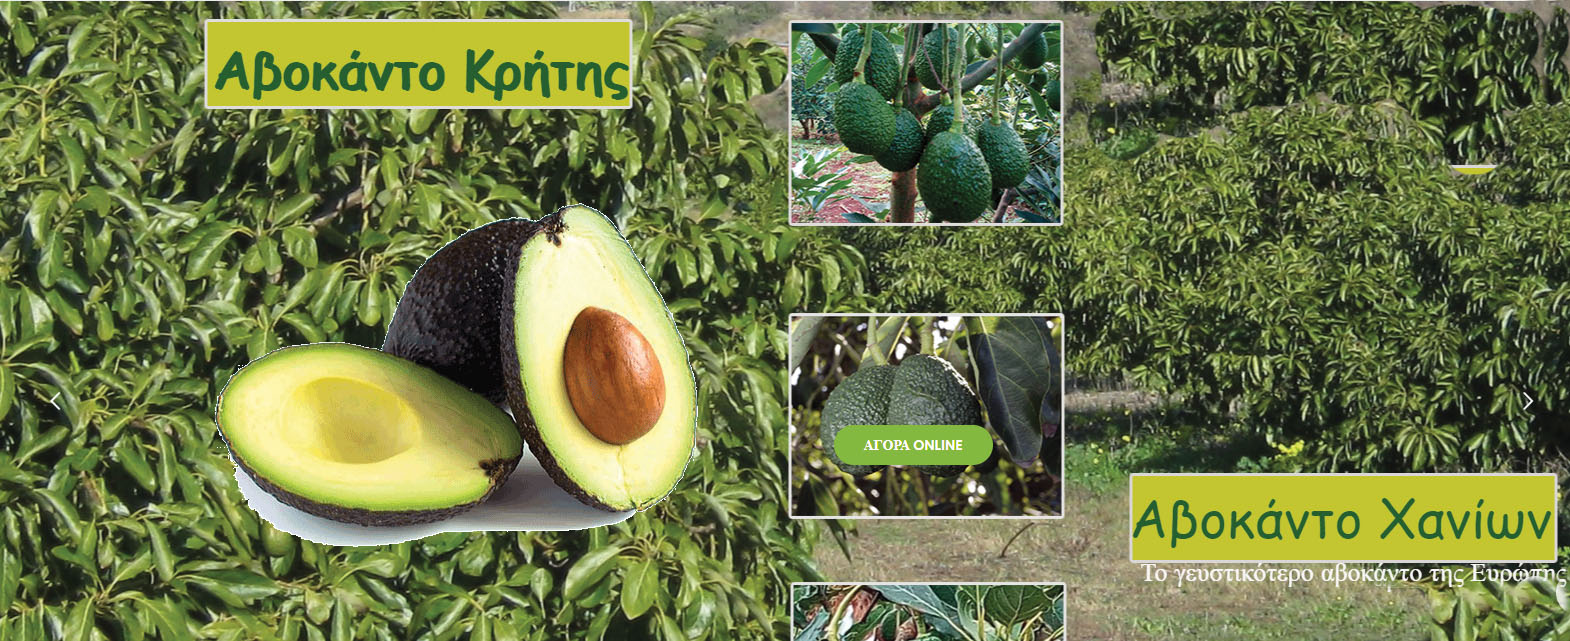 Avocado fruit, crops, plants recipes, cultivation